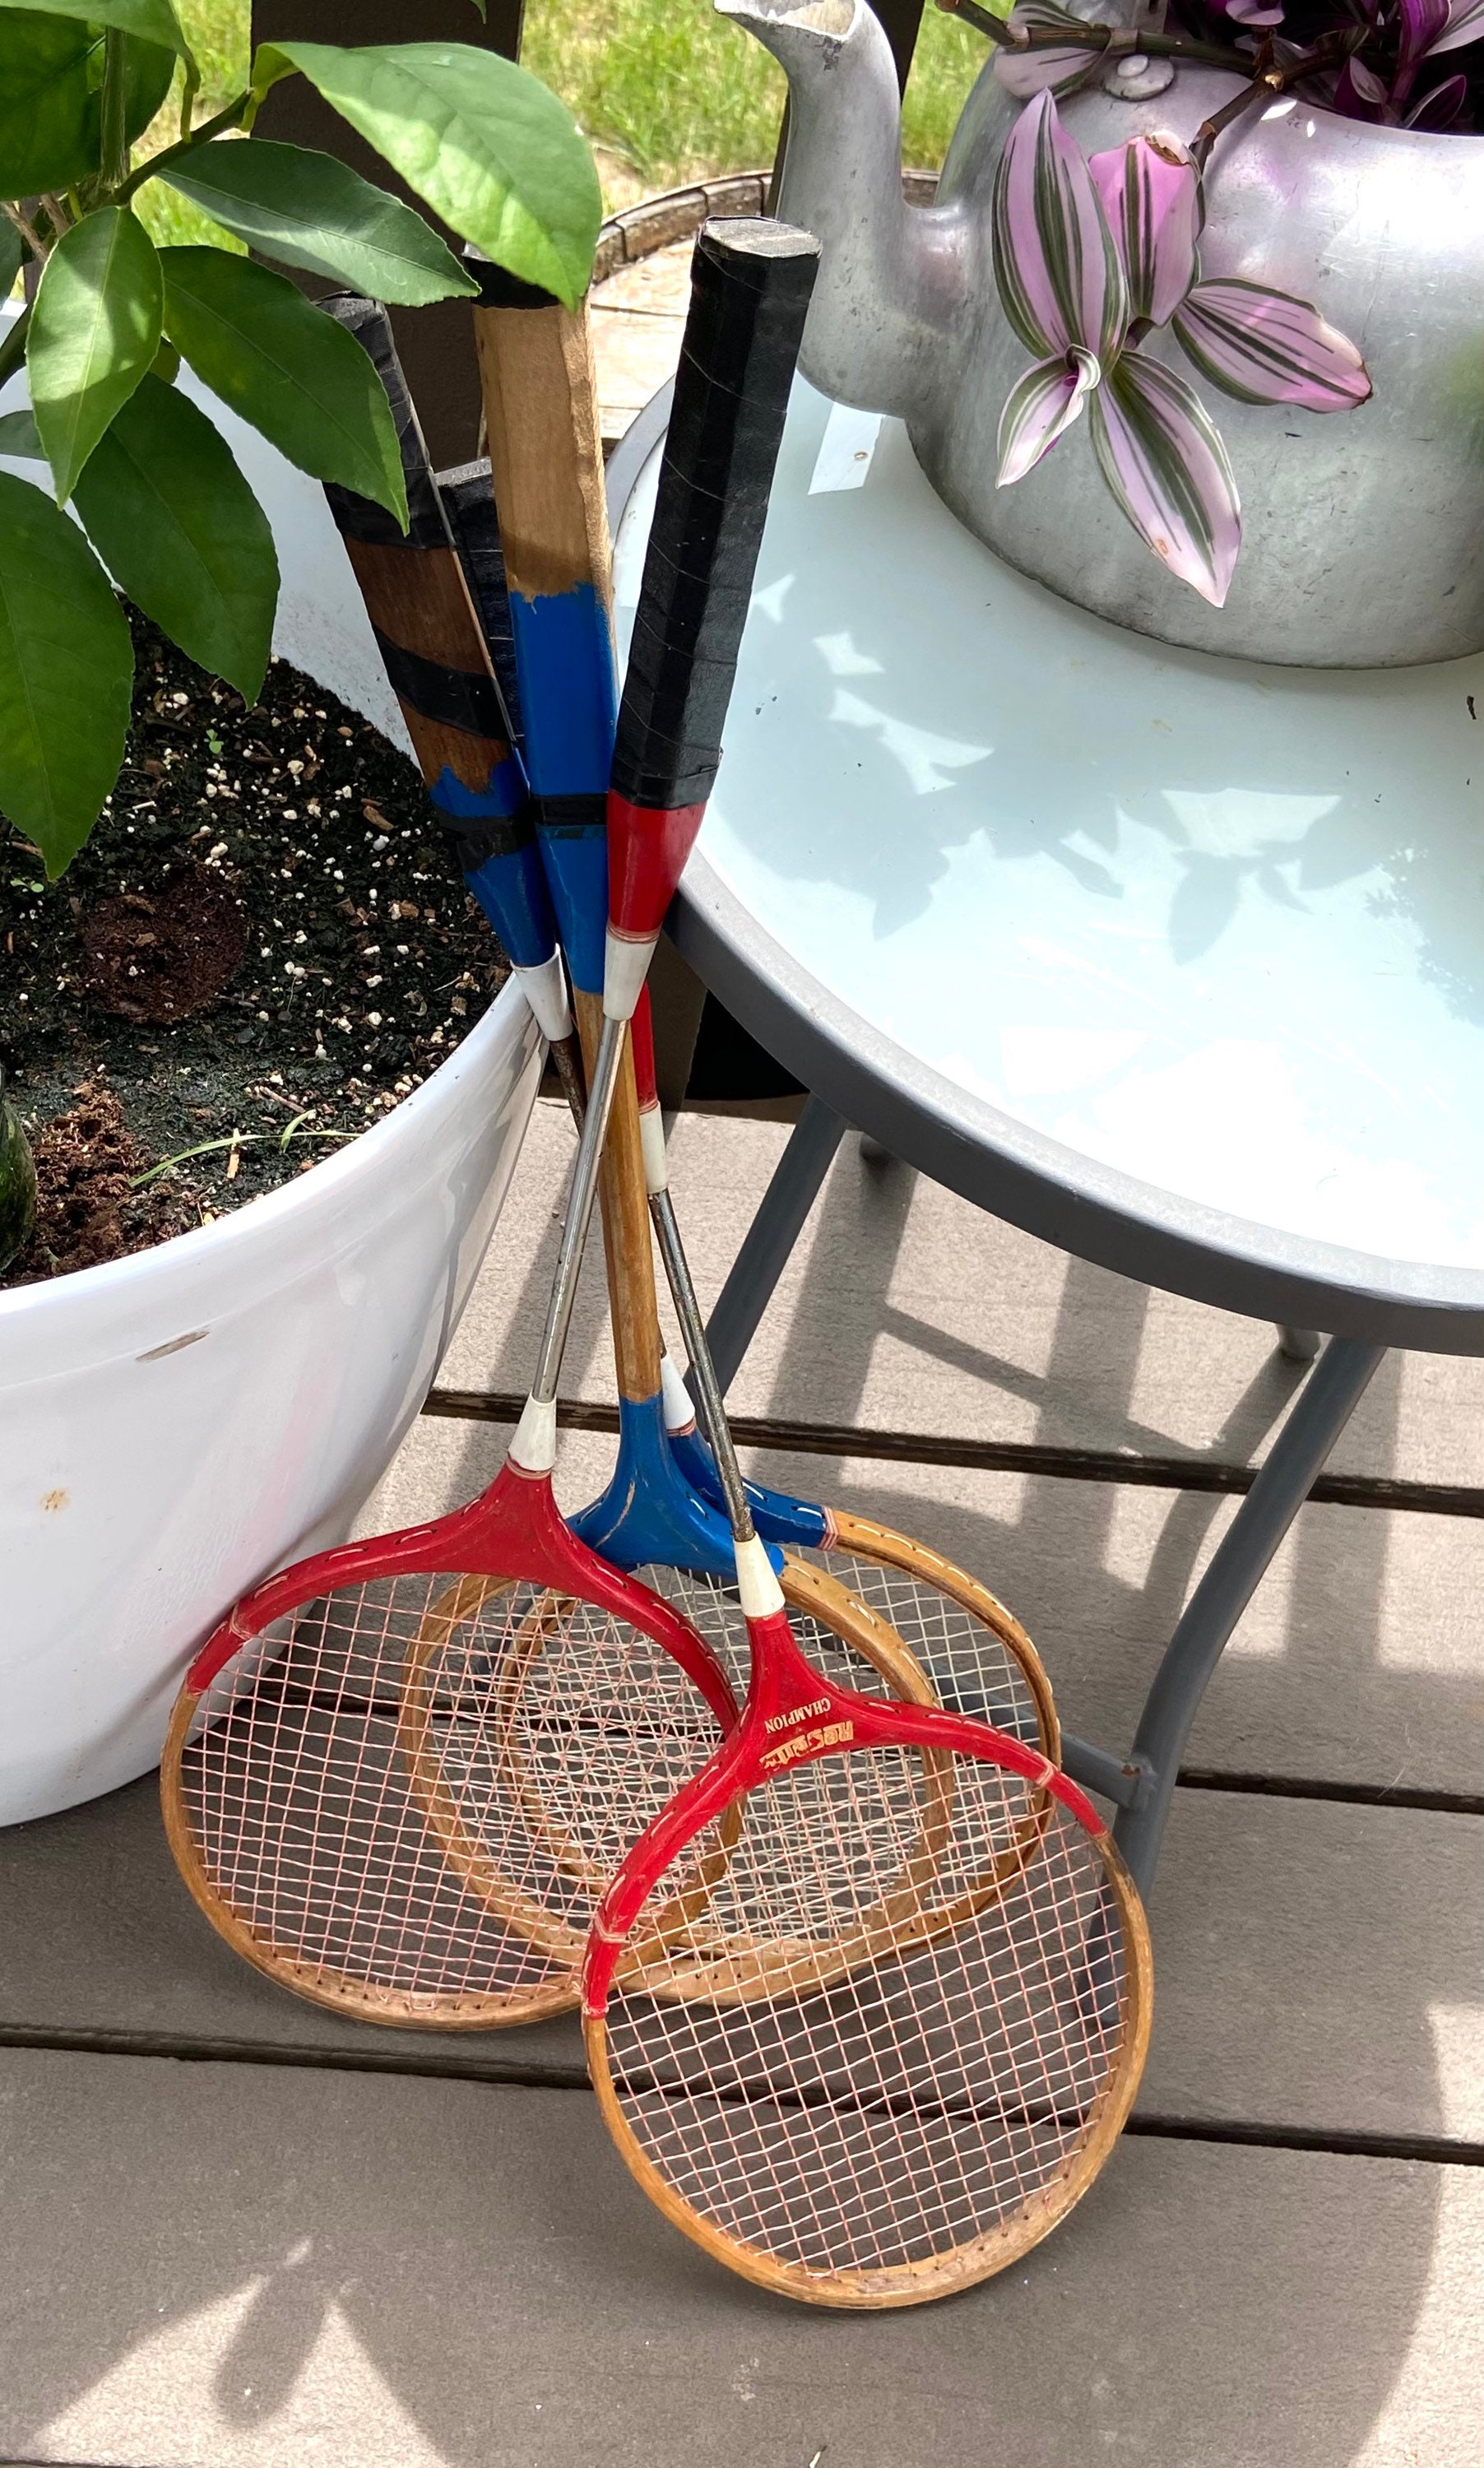 Vintage Badminton Set including 4 Wooden Rackets and 2 Shuttlecock (Sport)